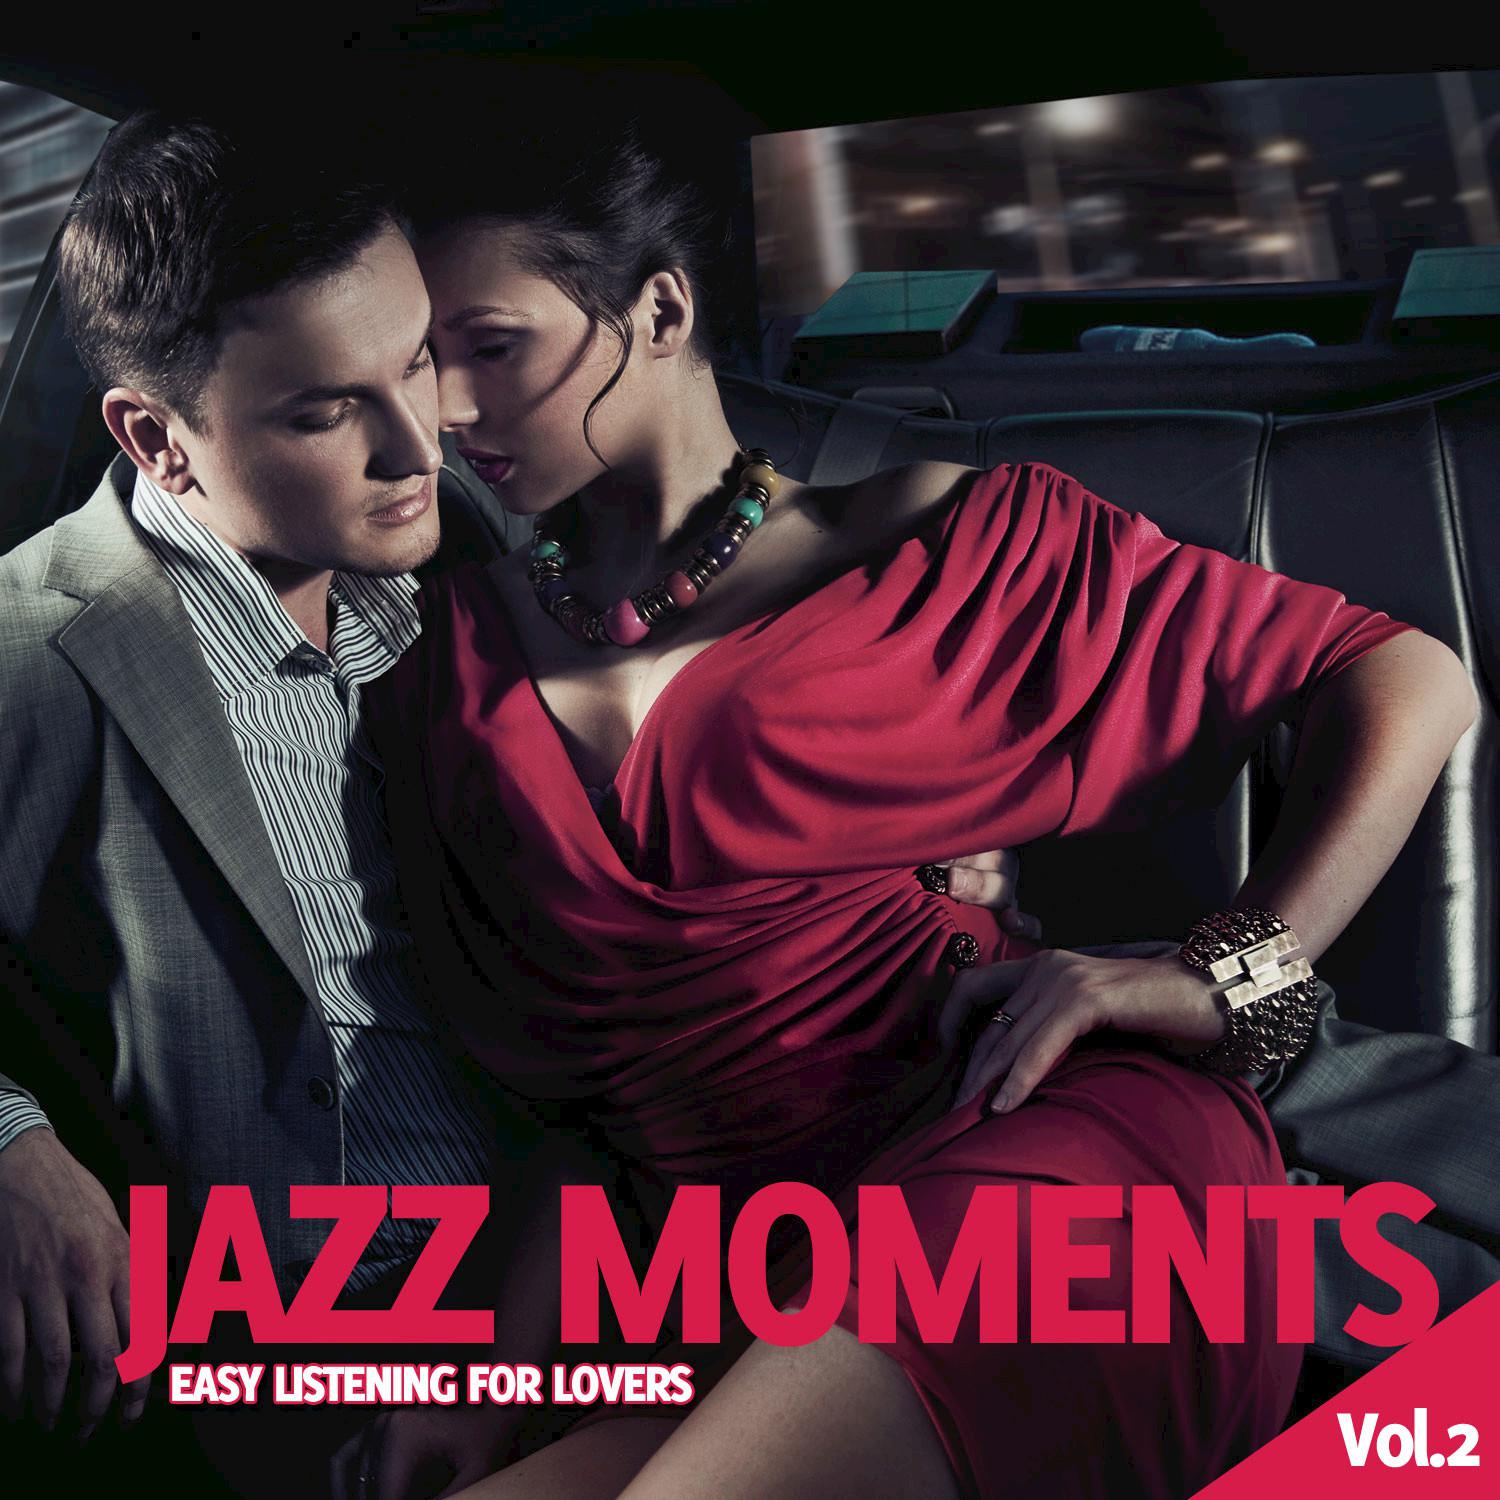 Jazz Moments Vol. 2